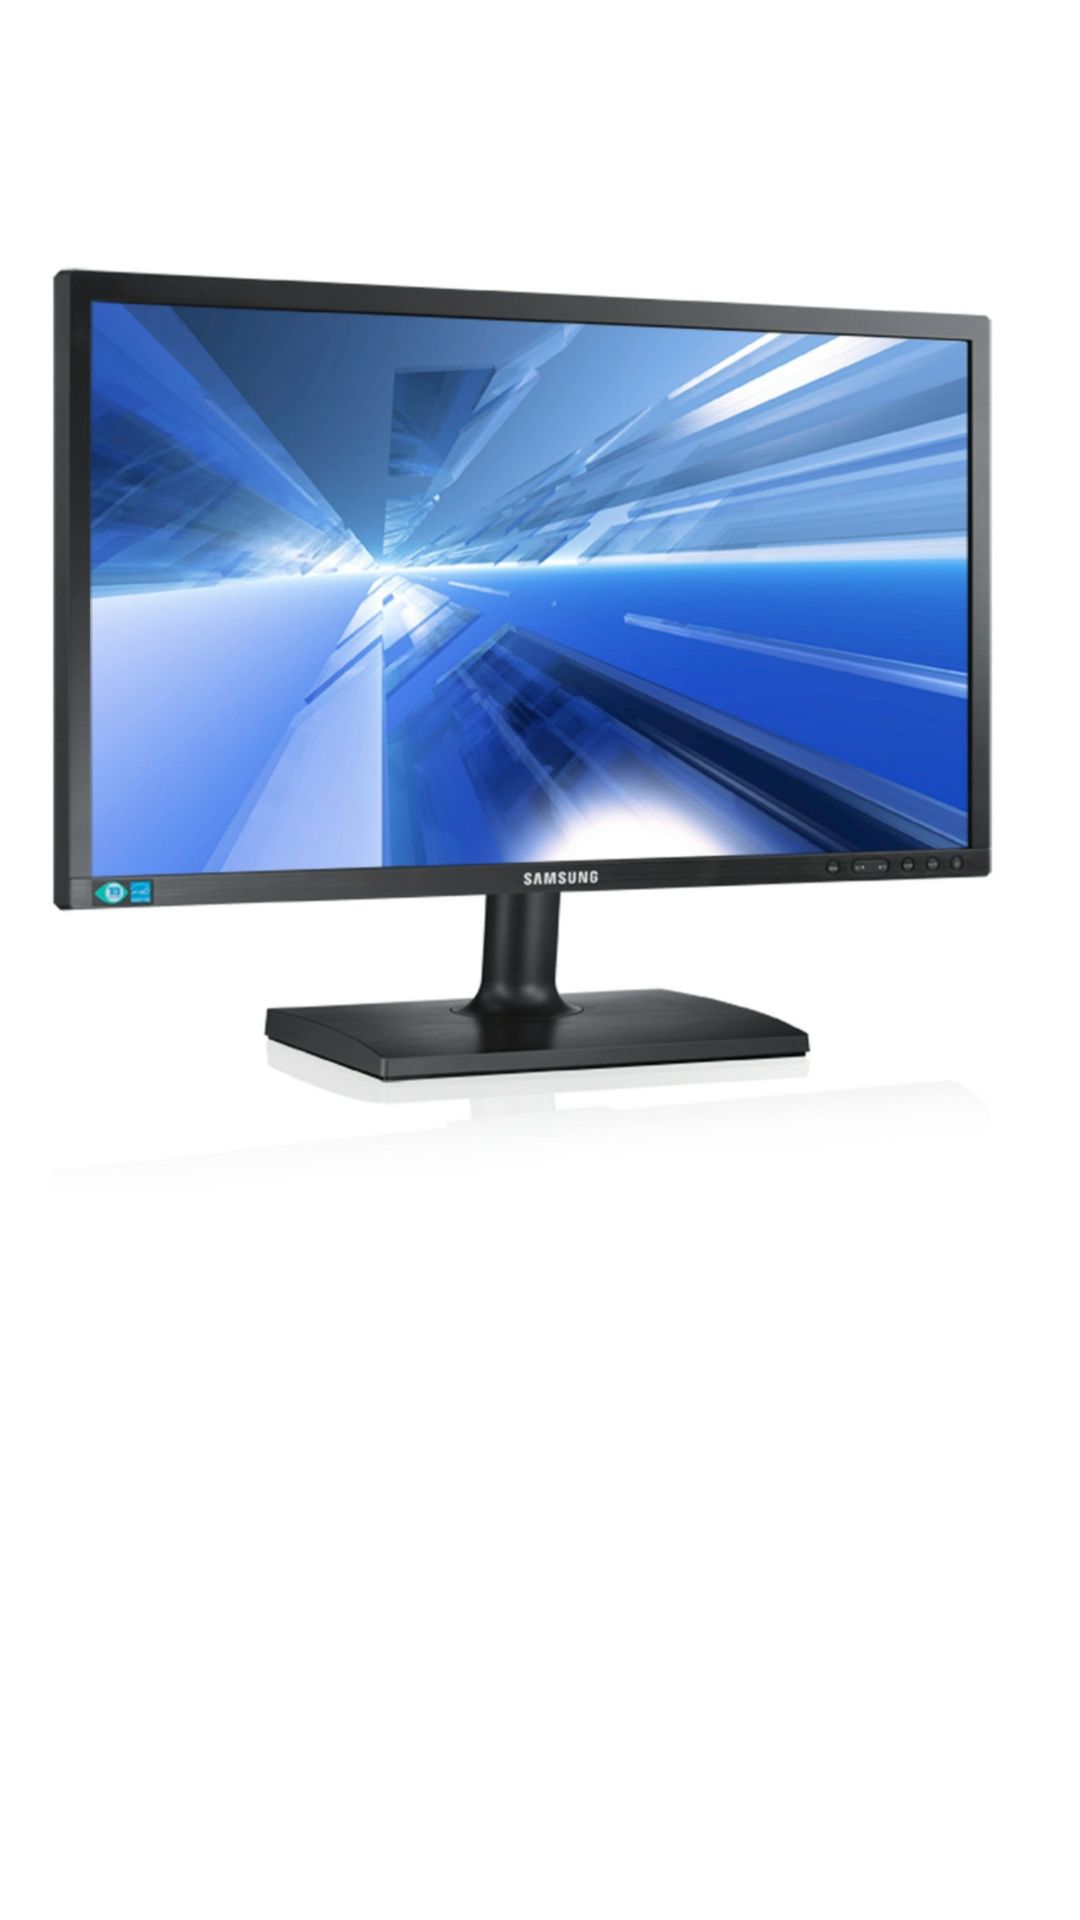 21.5" Widescreen LED LCD Monitor W/ VGA & POWER CORD (Grade A)